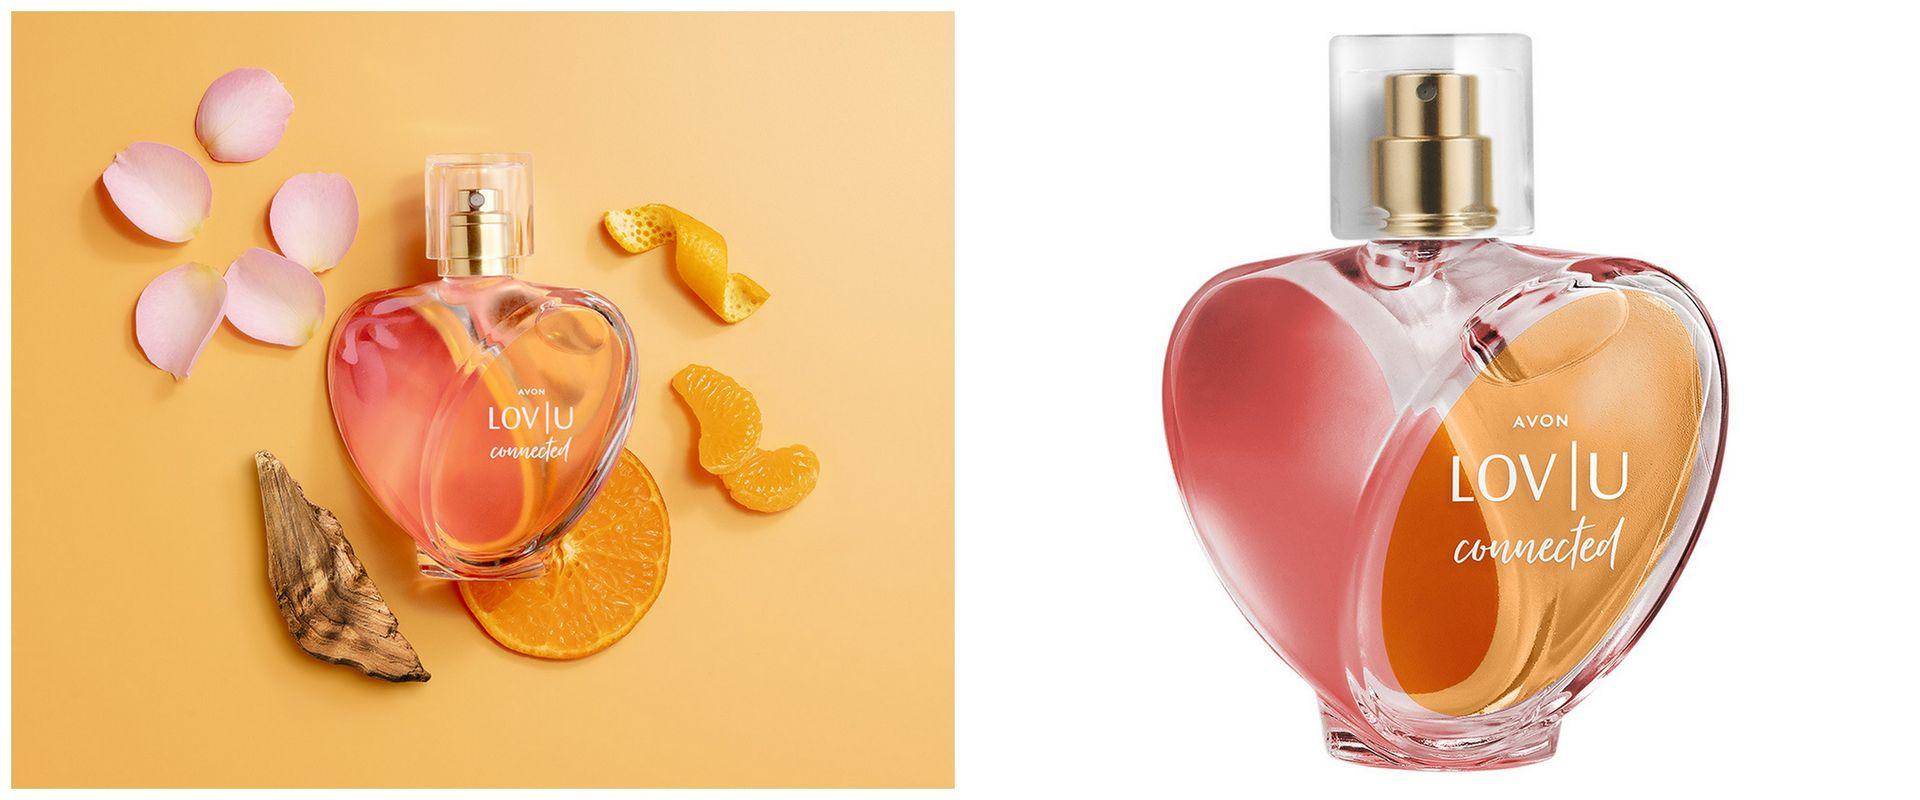 Zapach, który zbliża - nowe perfumy Lov U Connected od Avon